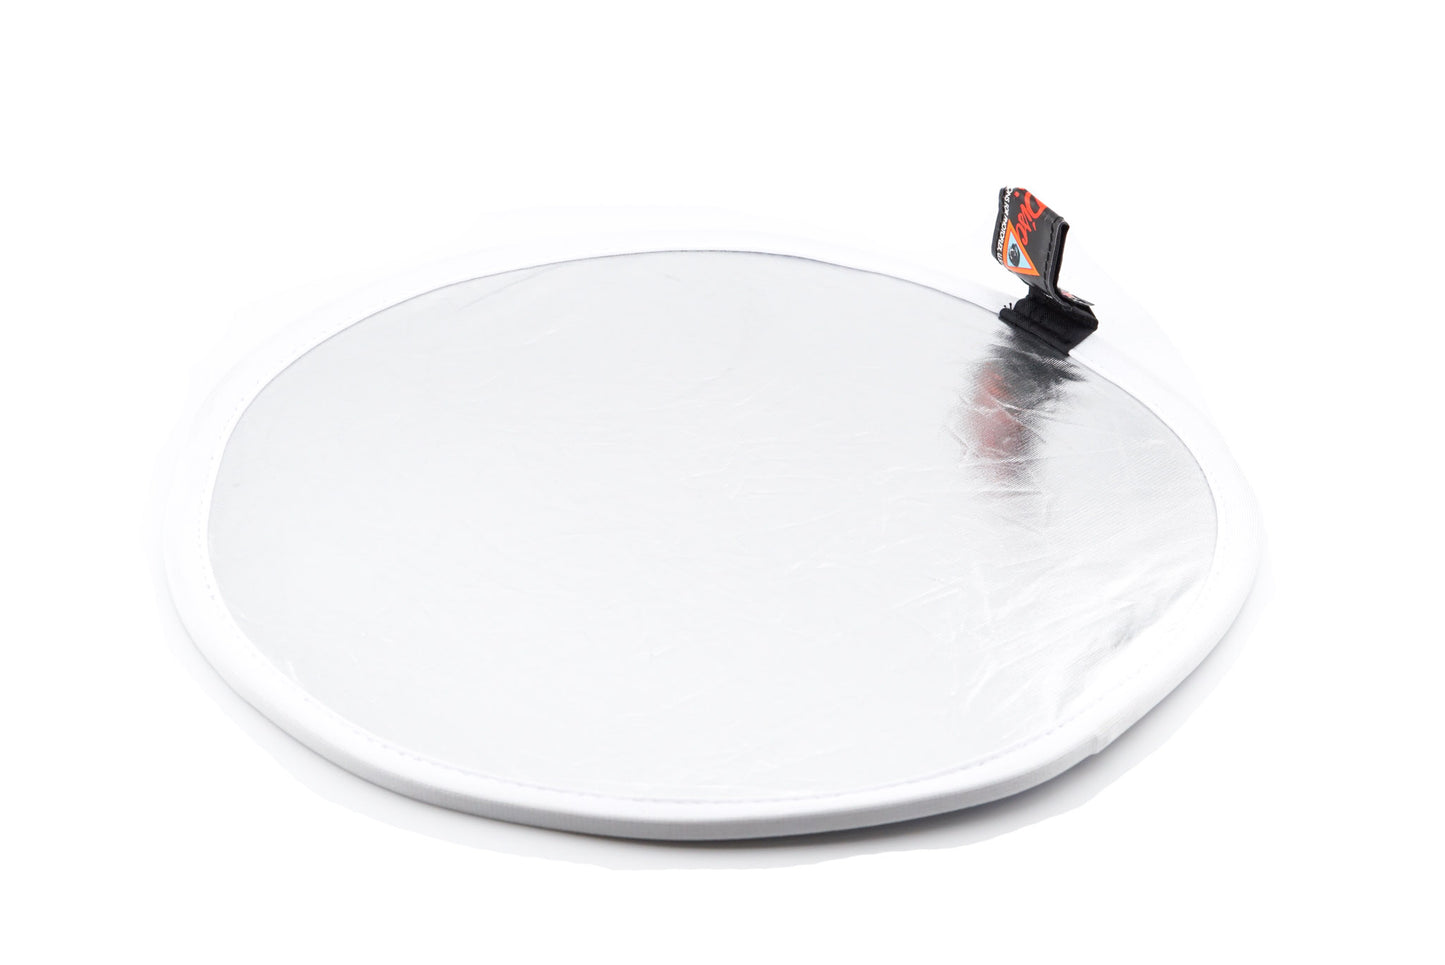 Photoflex LiteDisc White/Silver 12" Reflector